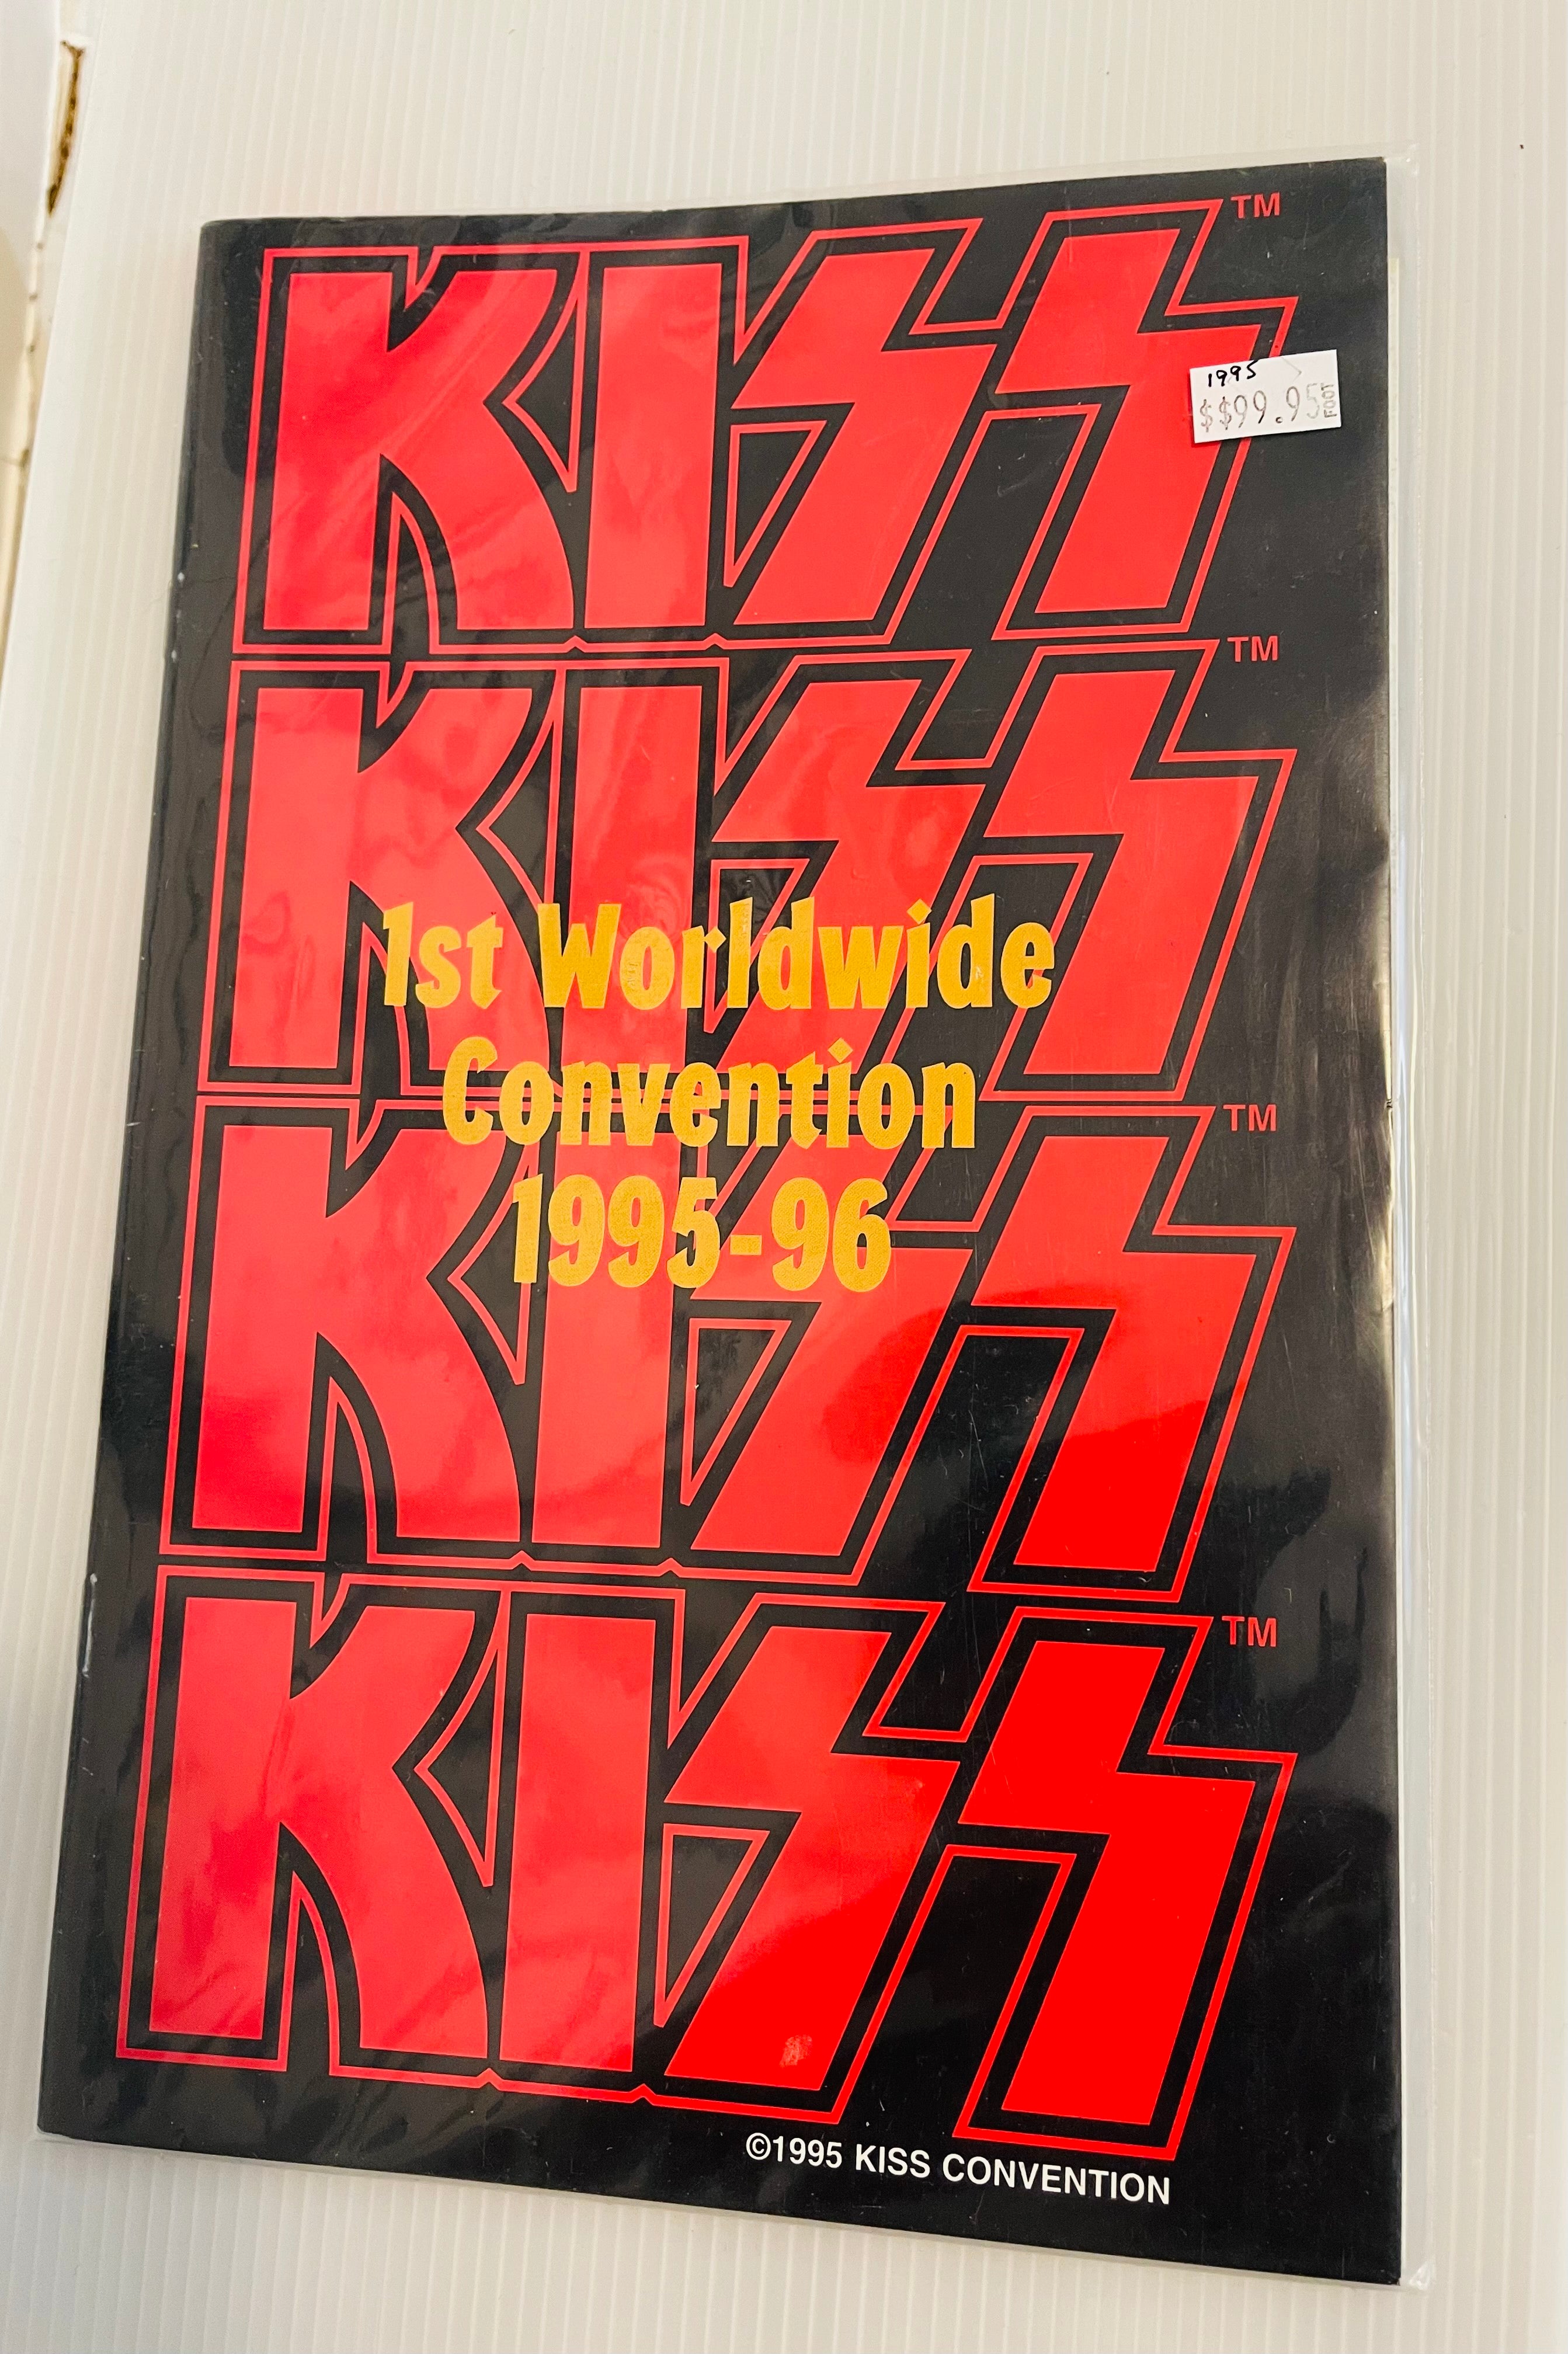 Kiss Rock Band first worldwide convention program 1995